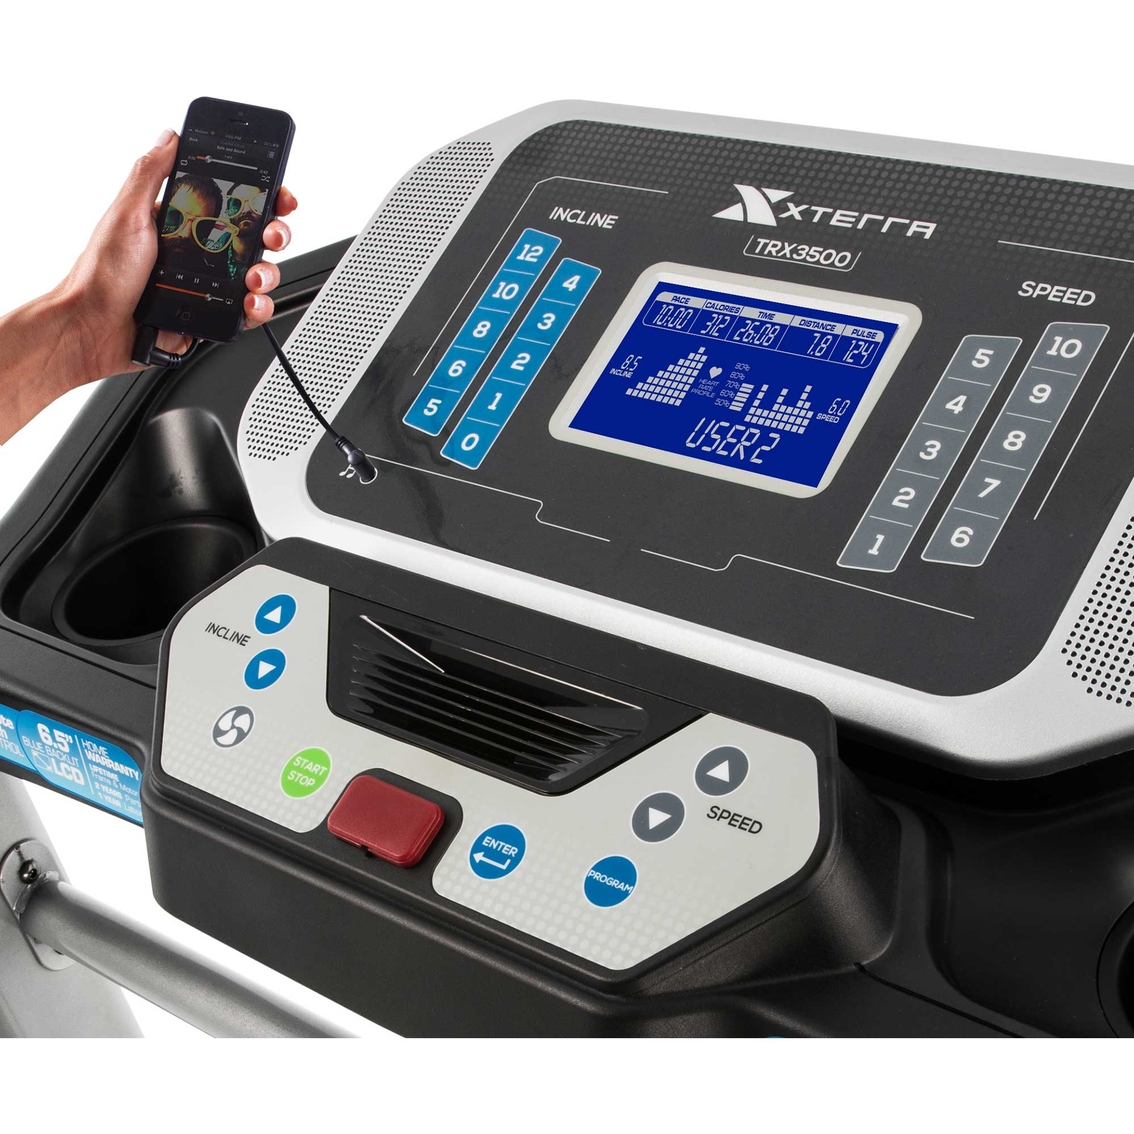 XTERRA Fitness TRX3500 Folding Treadmill - Image 10 of 10